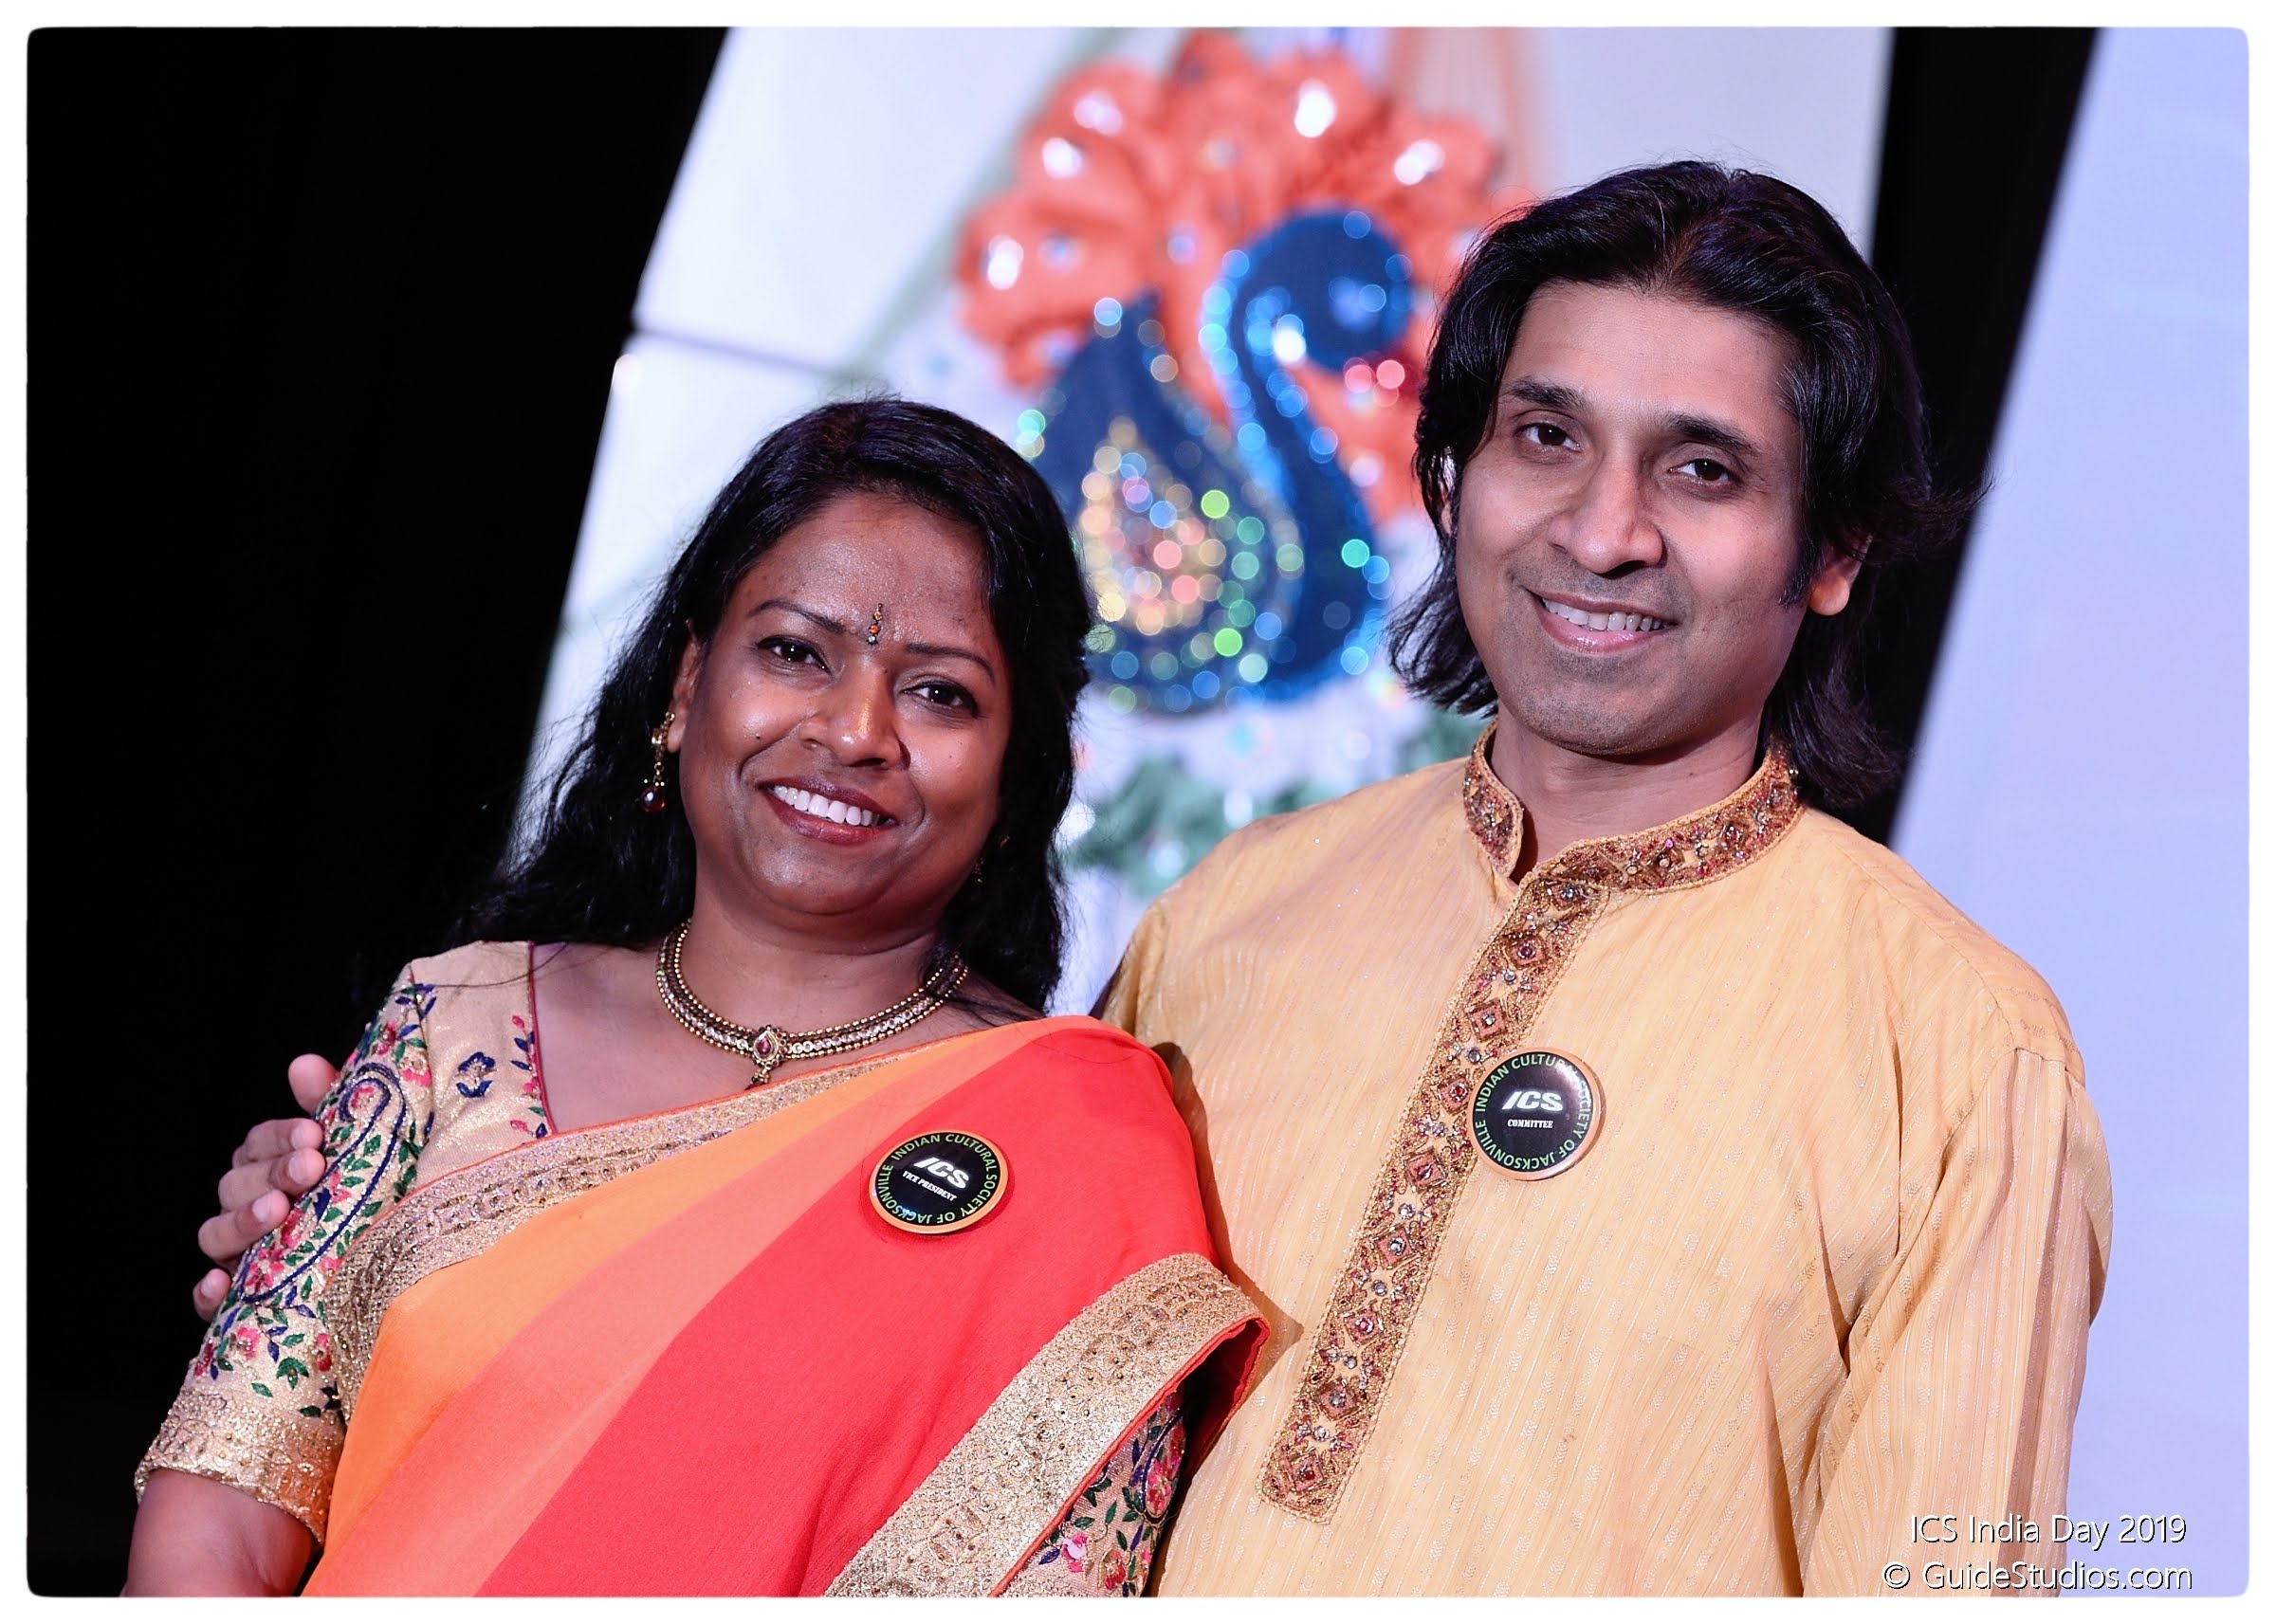 Priya & Jitesh at ICS Independence Day